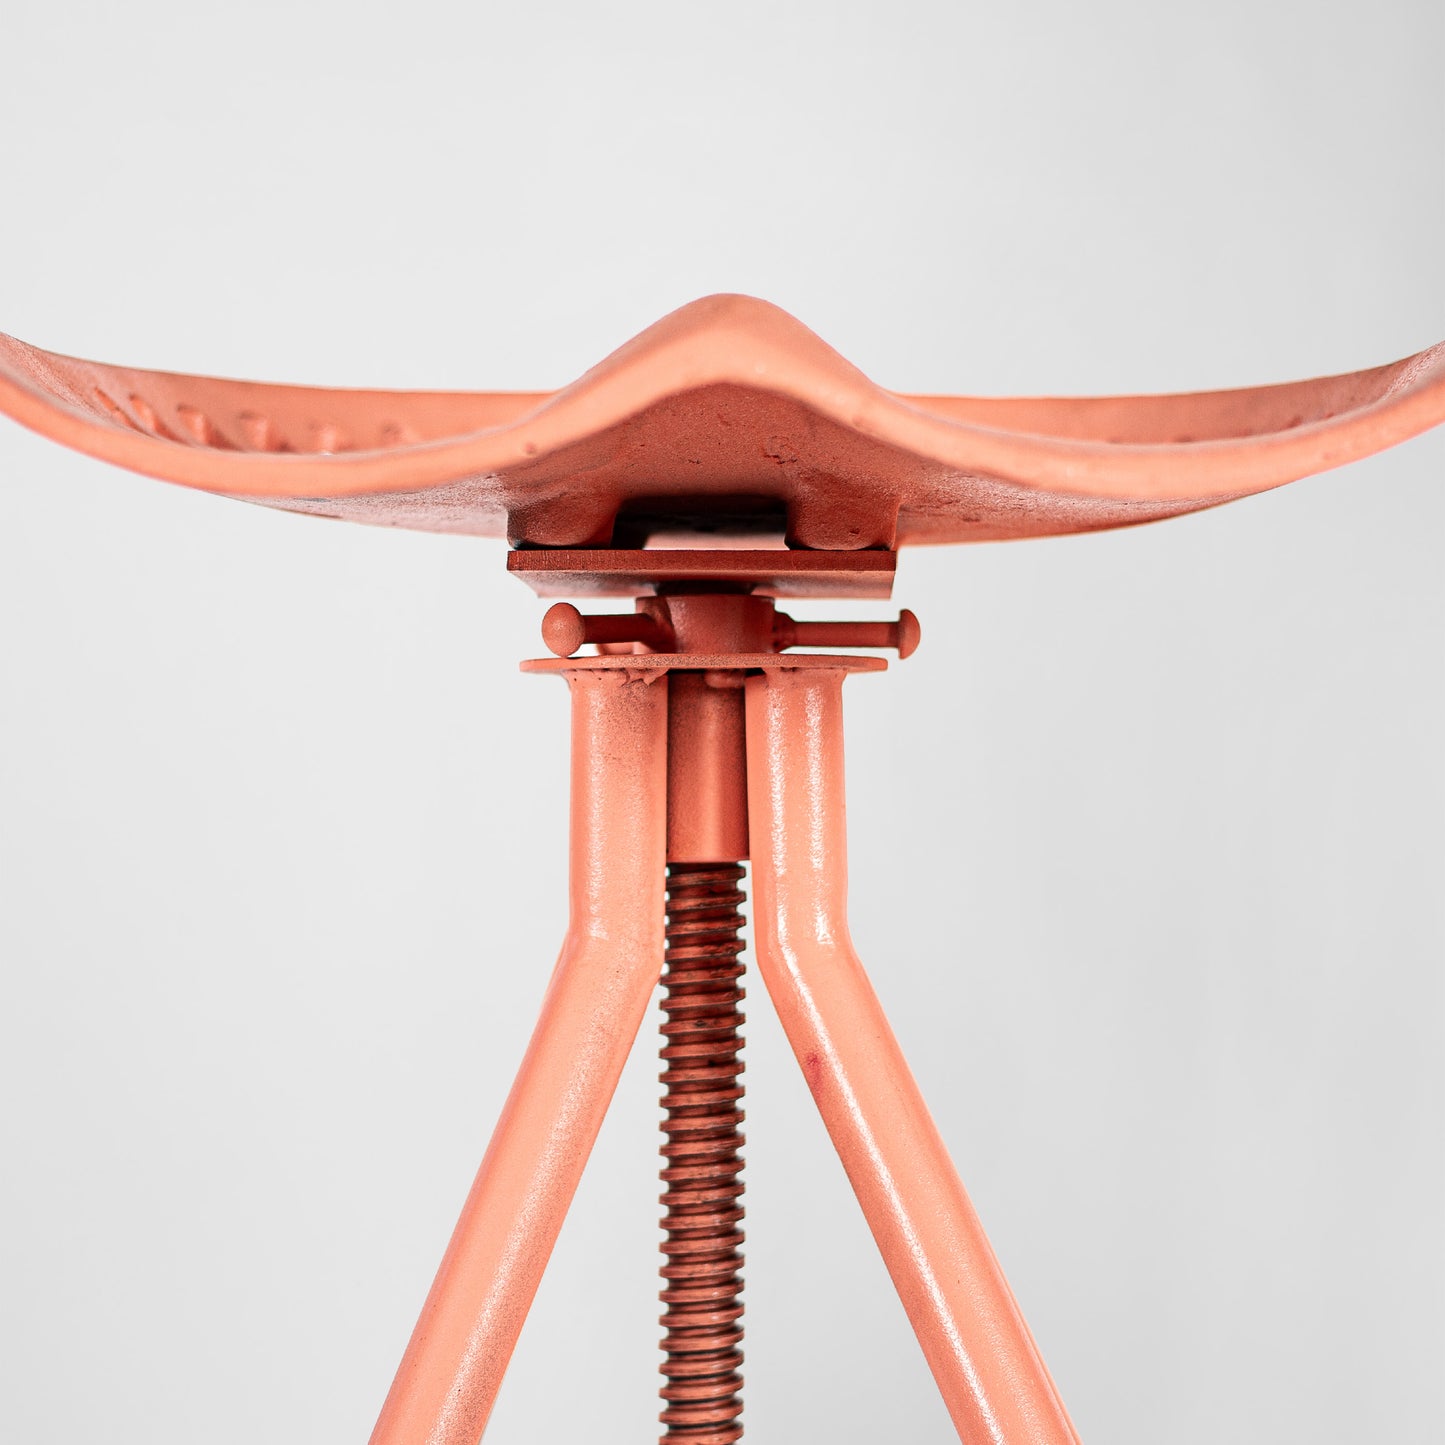 Greta Grease – Handmade Industrie-Design Dreh-Hocker aus Metall in flamingo rot